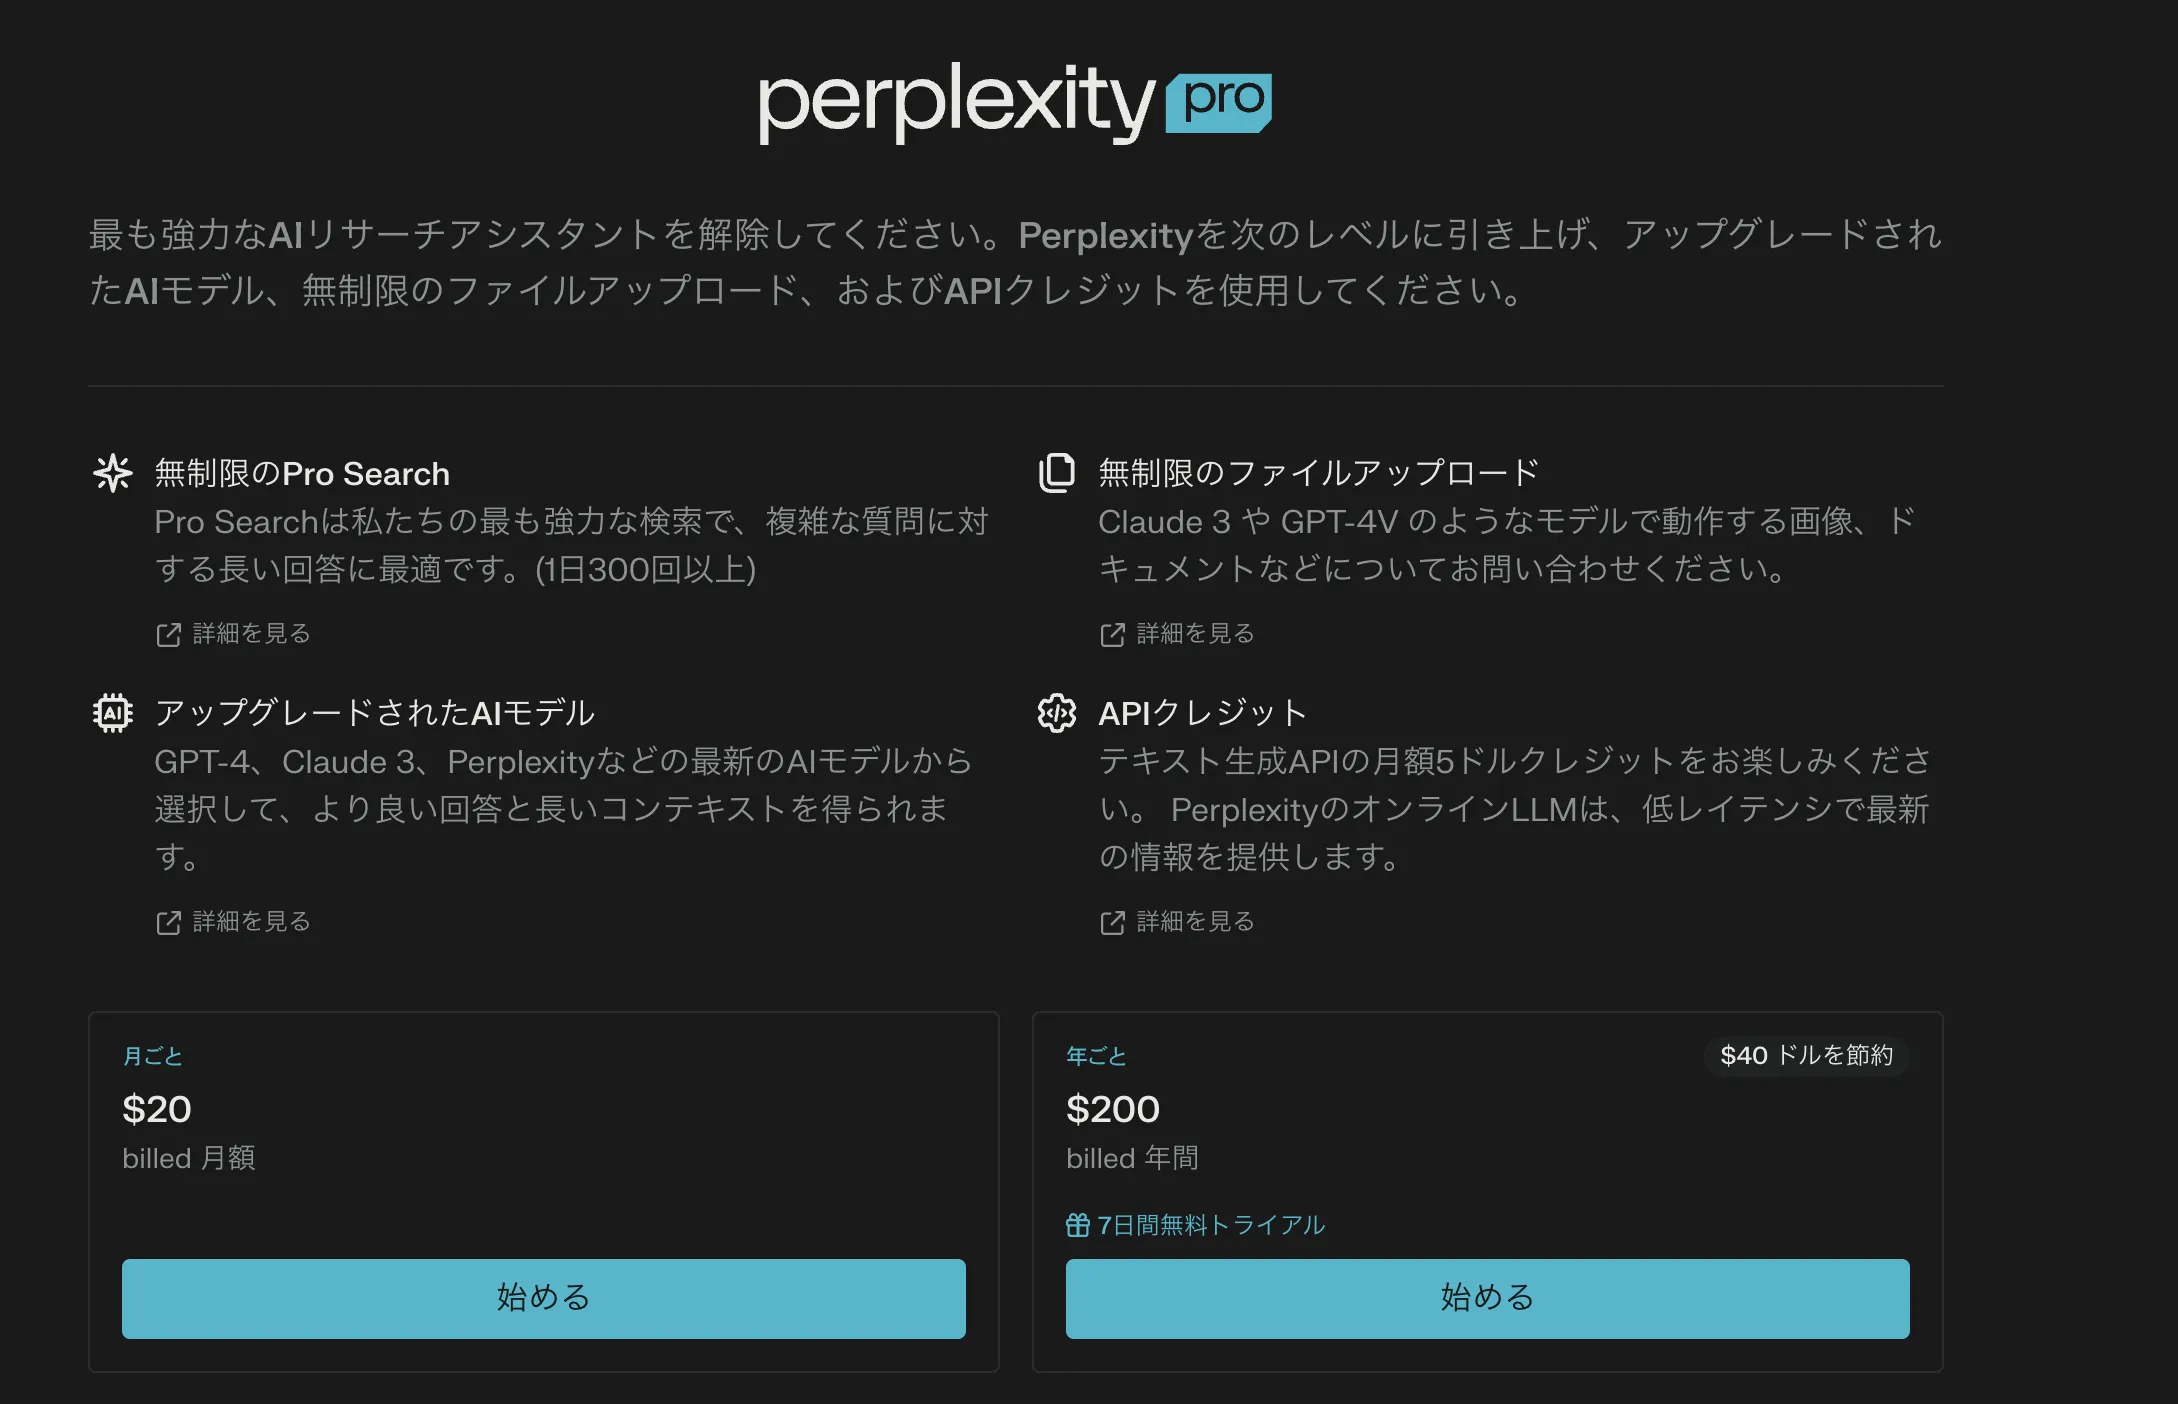 Perplexity Pro